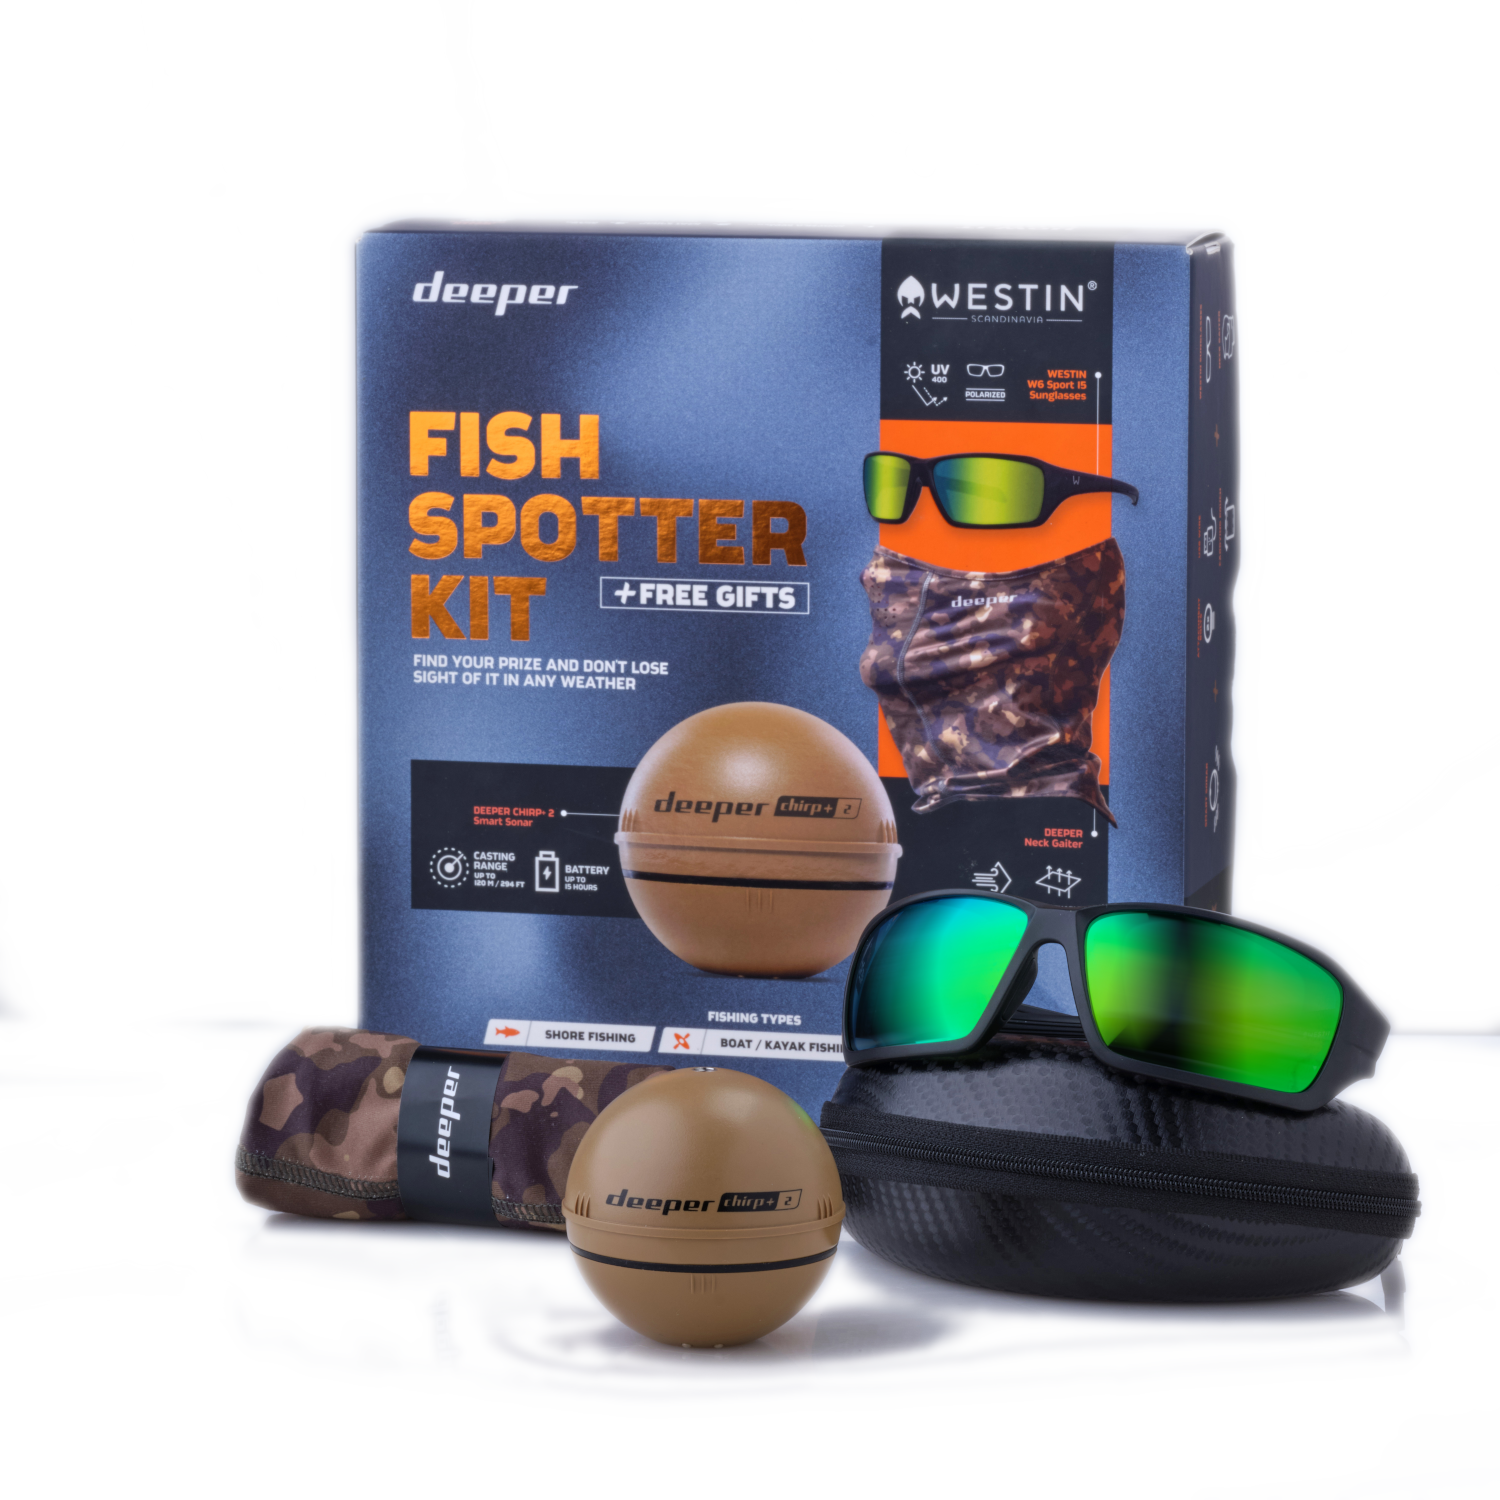 1 Deeper Smart Sonar Chirp+ 2 Fosh Spotter Kit Westin